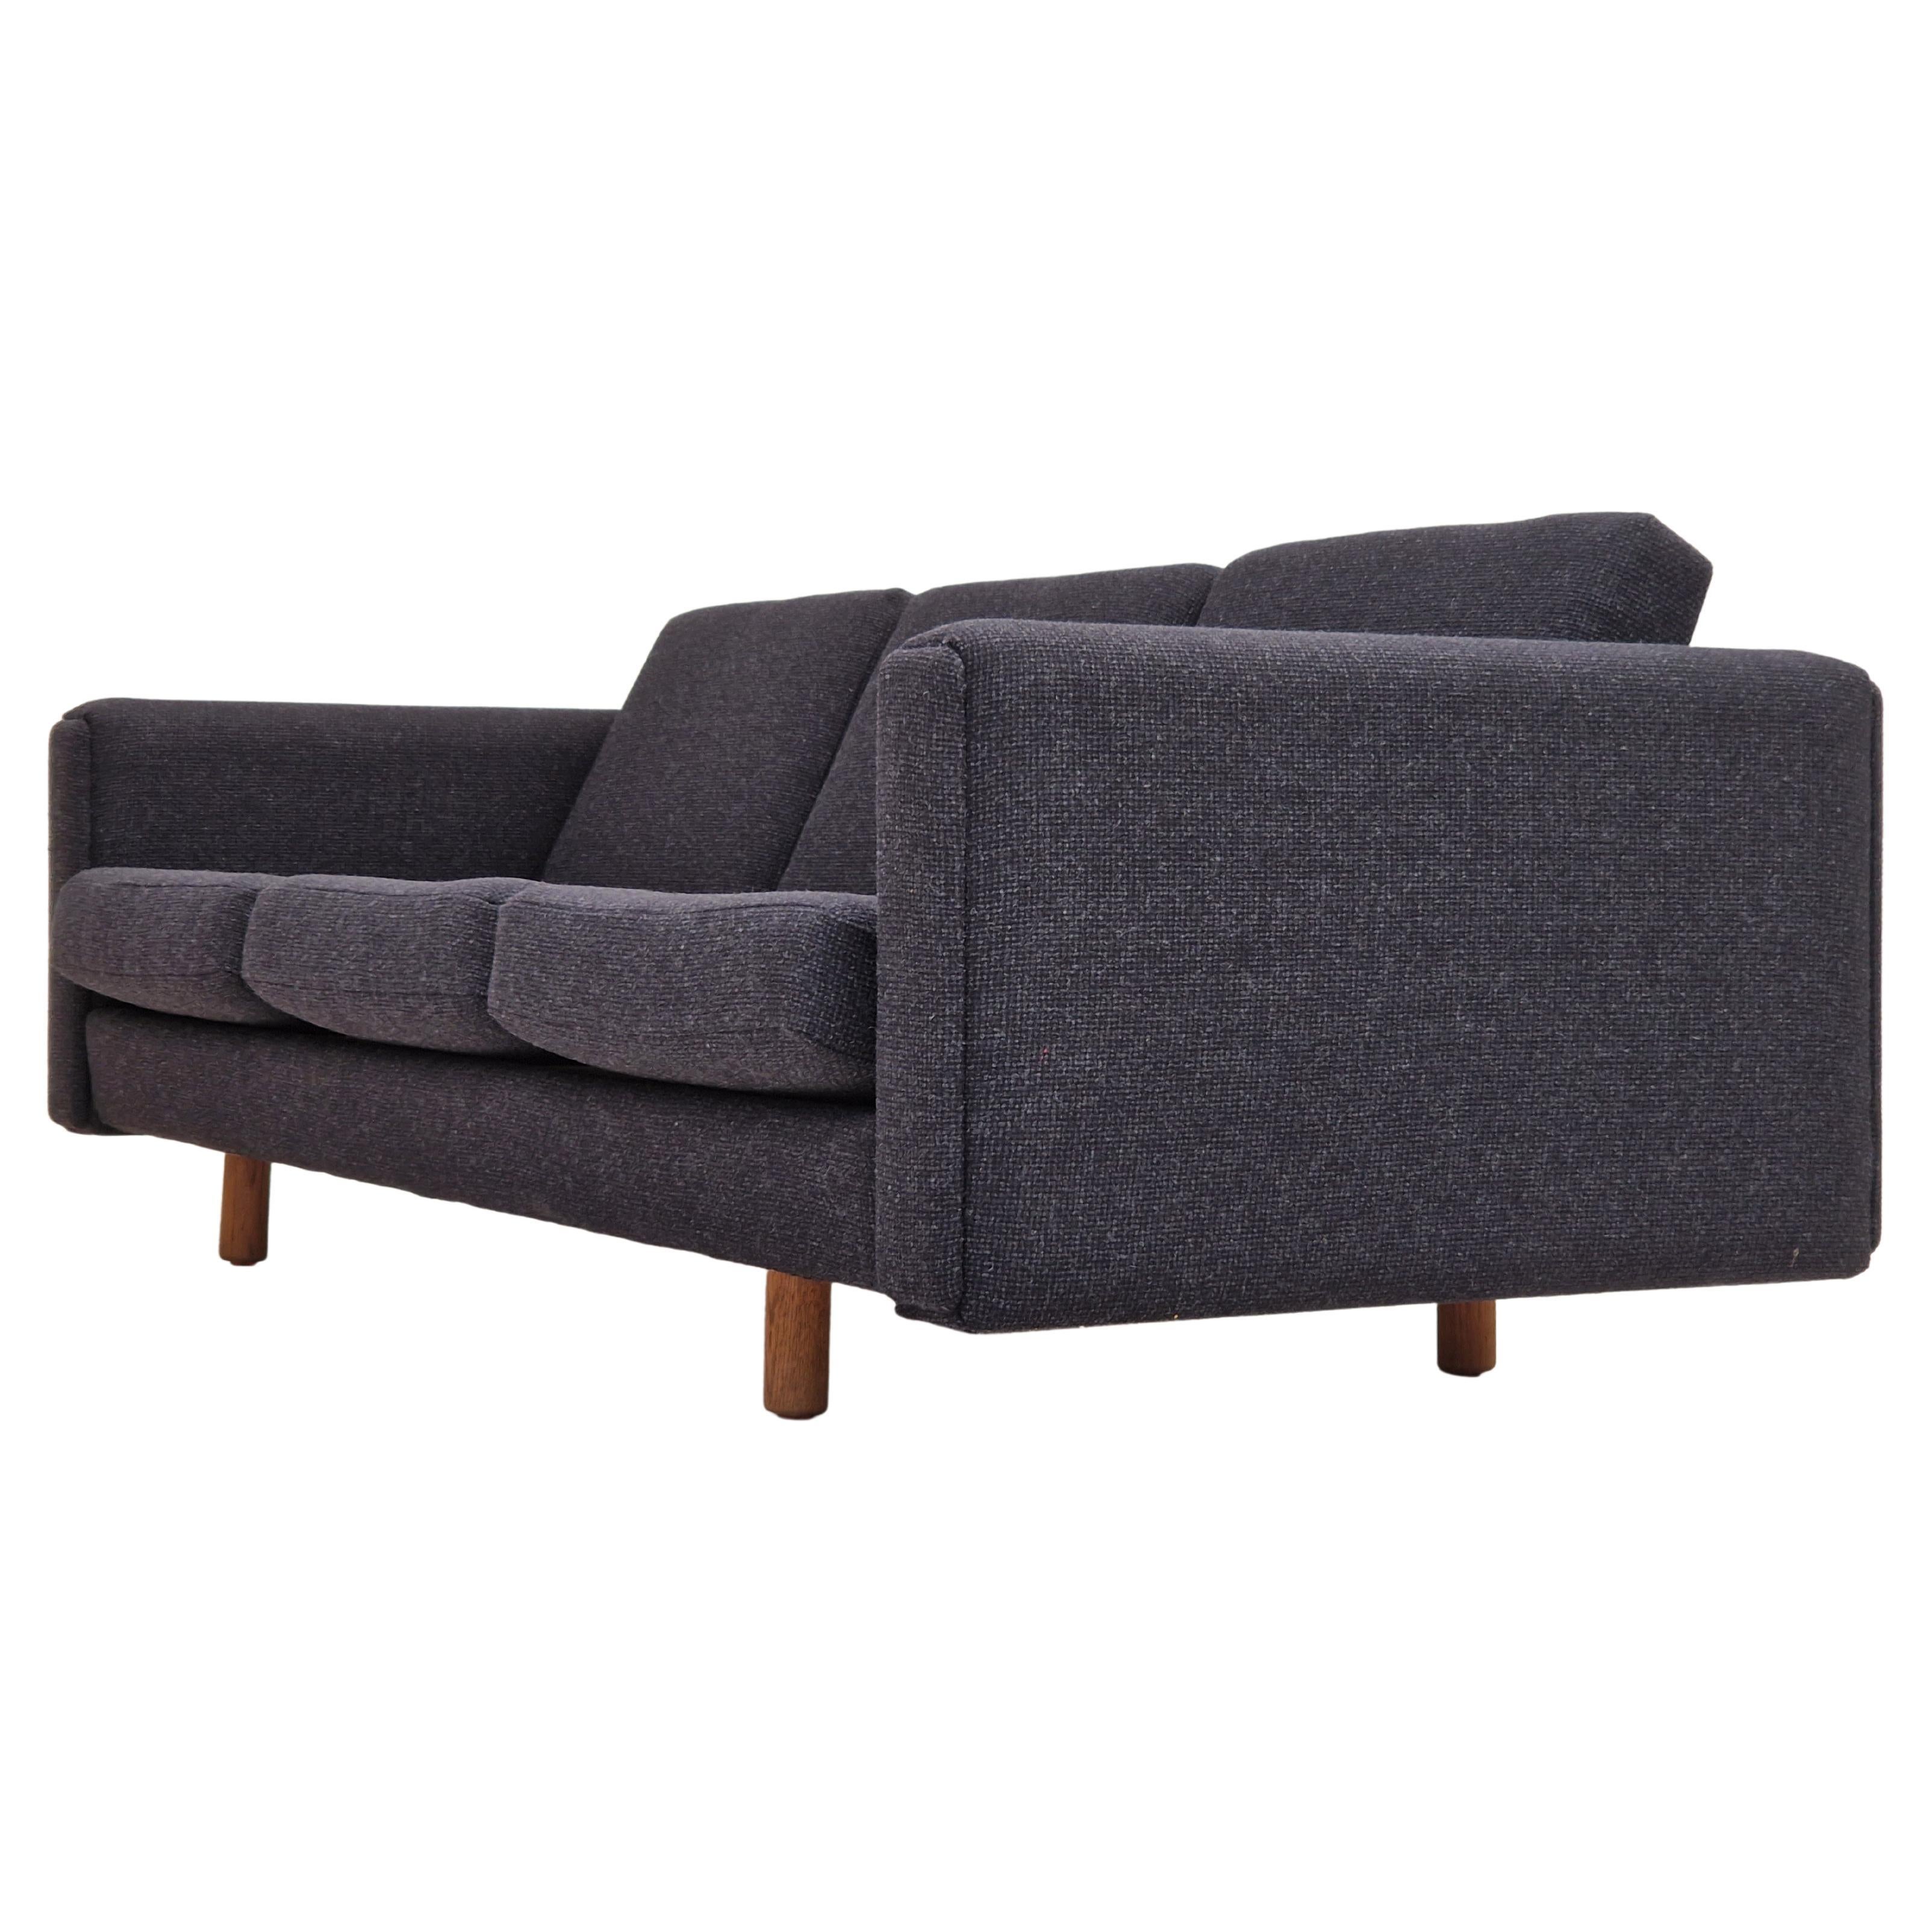 1970s, Danish design by H.J. Wegner, model GE300, reupholstered sofa. For Sale